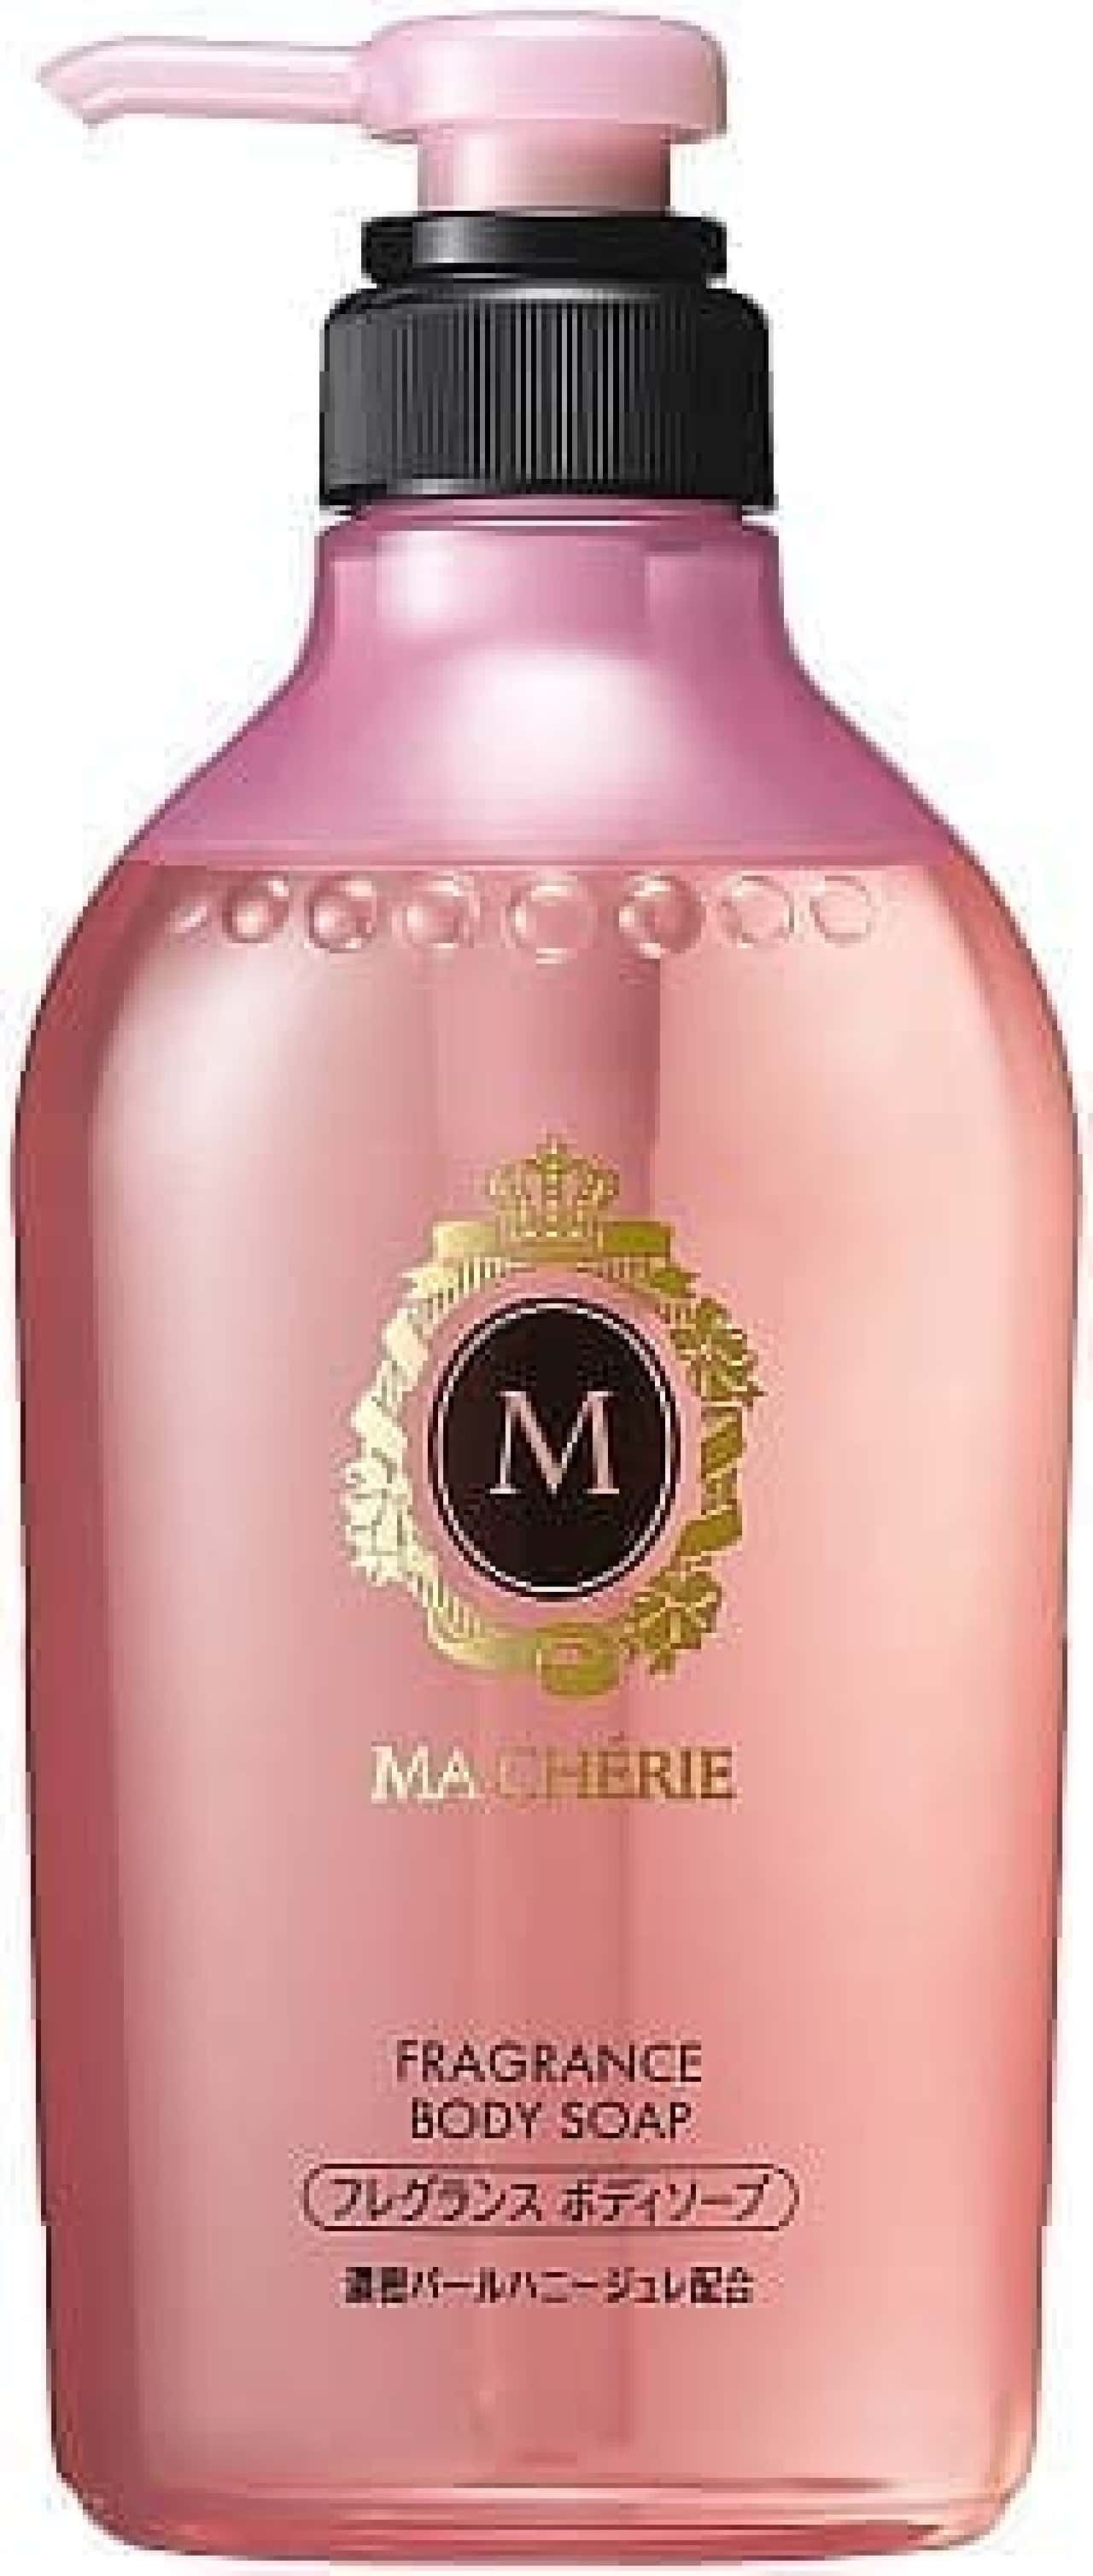 Masheri Fragrance Body Soap